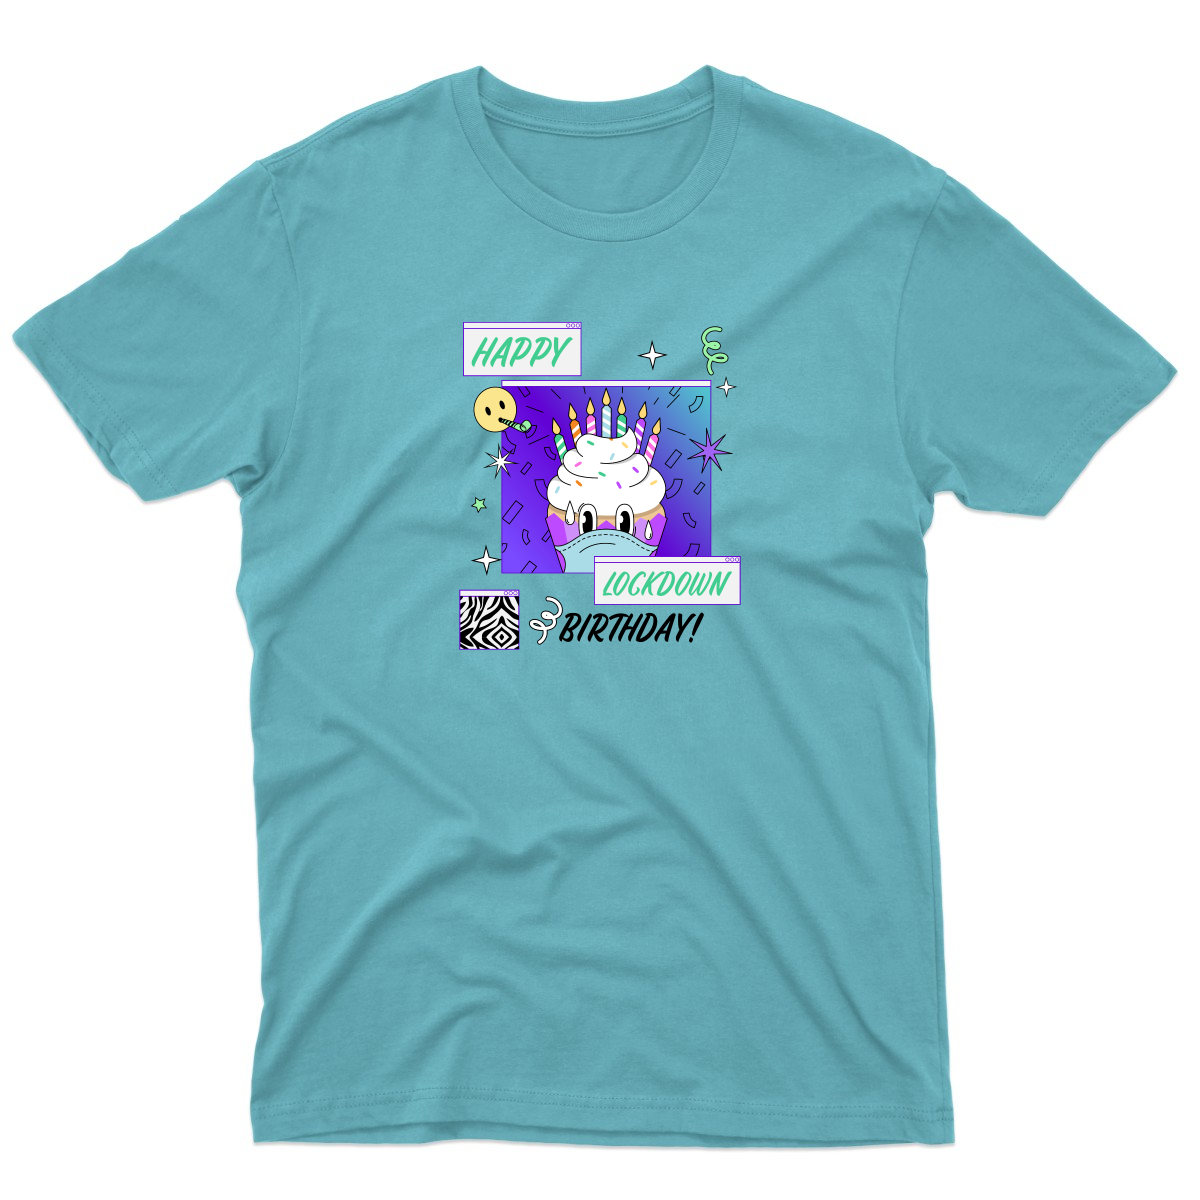 Happy Lock-down Birthday Men's T-shirt | Turquoise